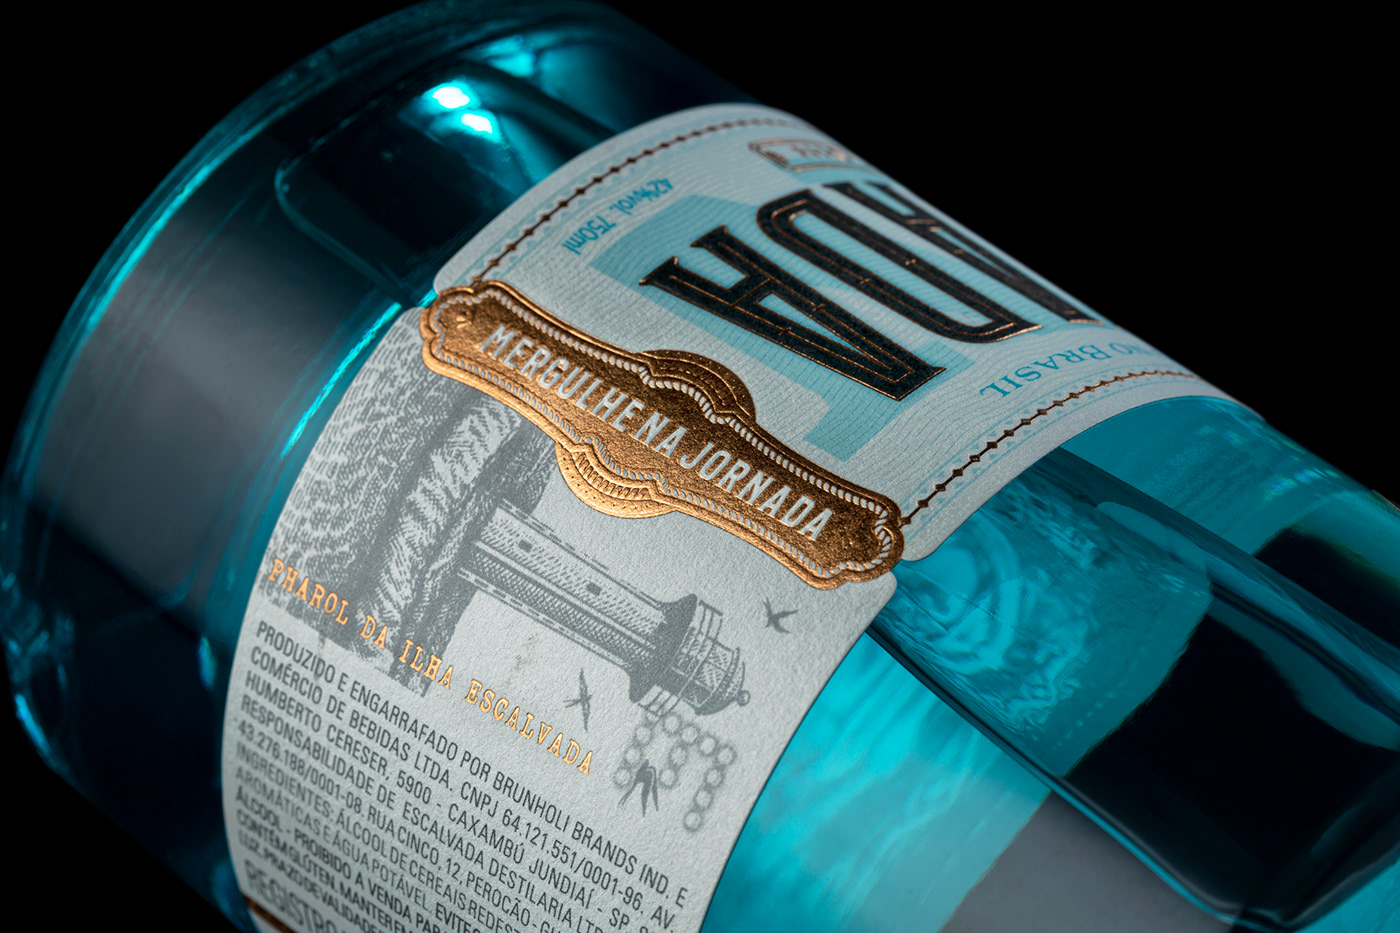 bottle brand identity drink gin Packaging Label Spirits alcohol beverage packaging design